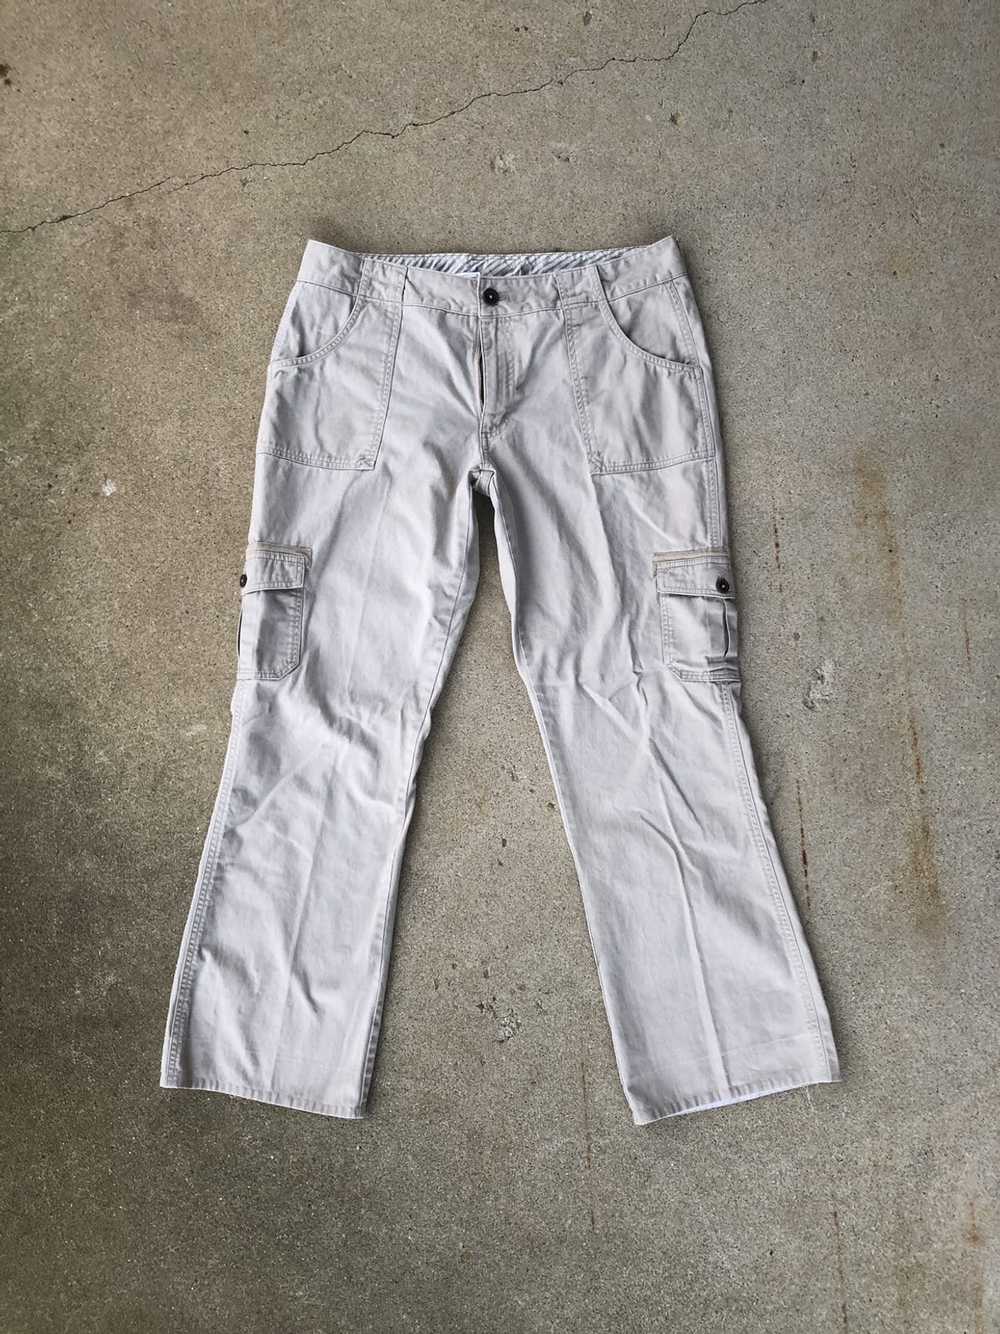 Carhartt × Hype × Streetwear Carhartt cargo pants - image 1